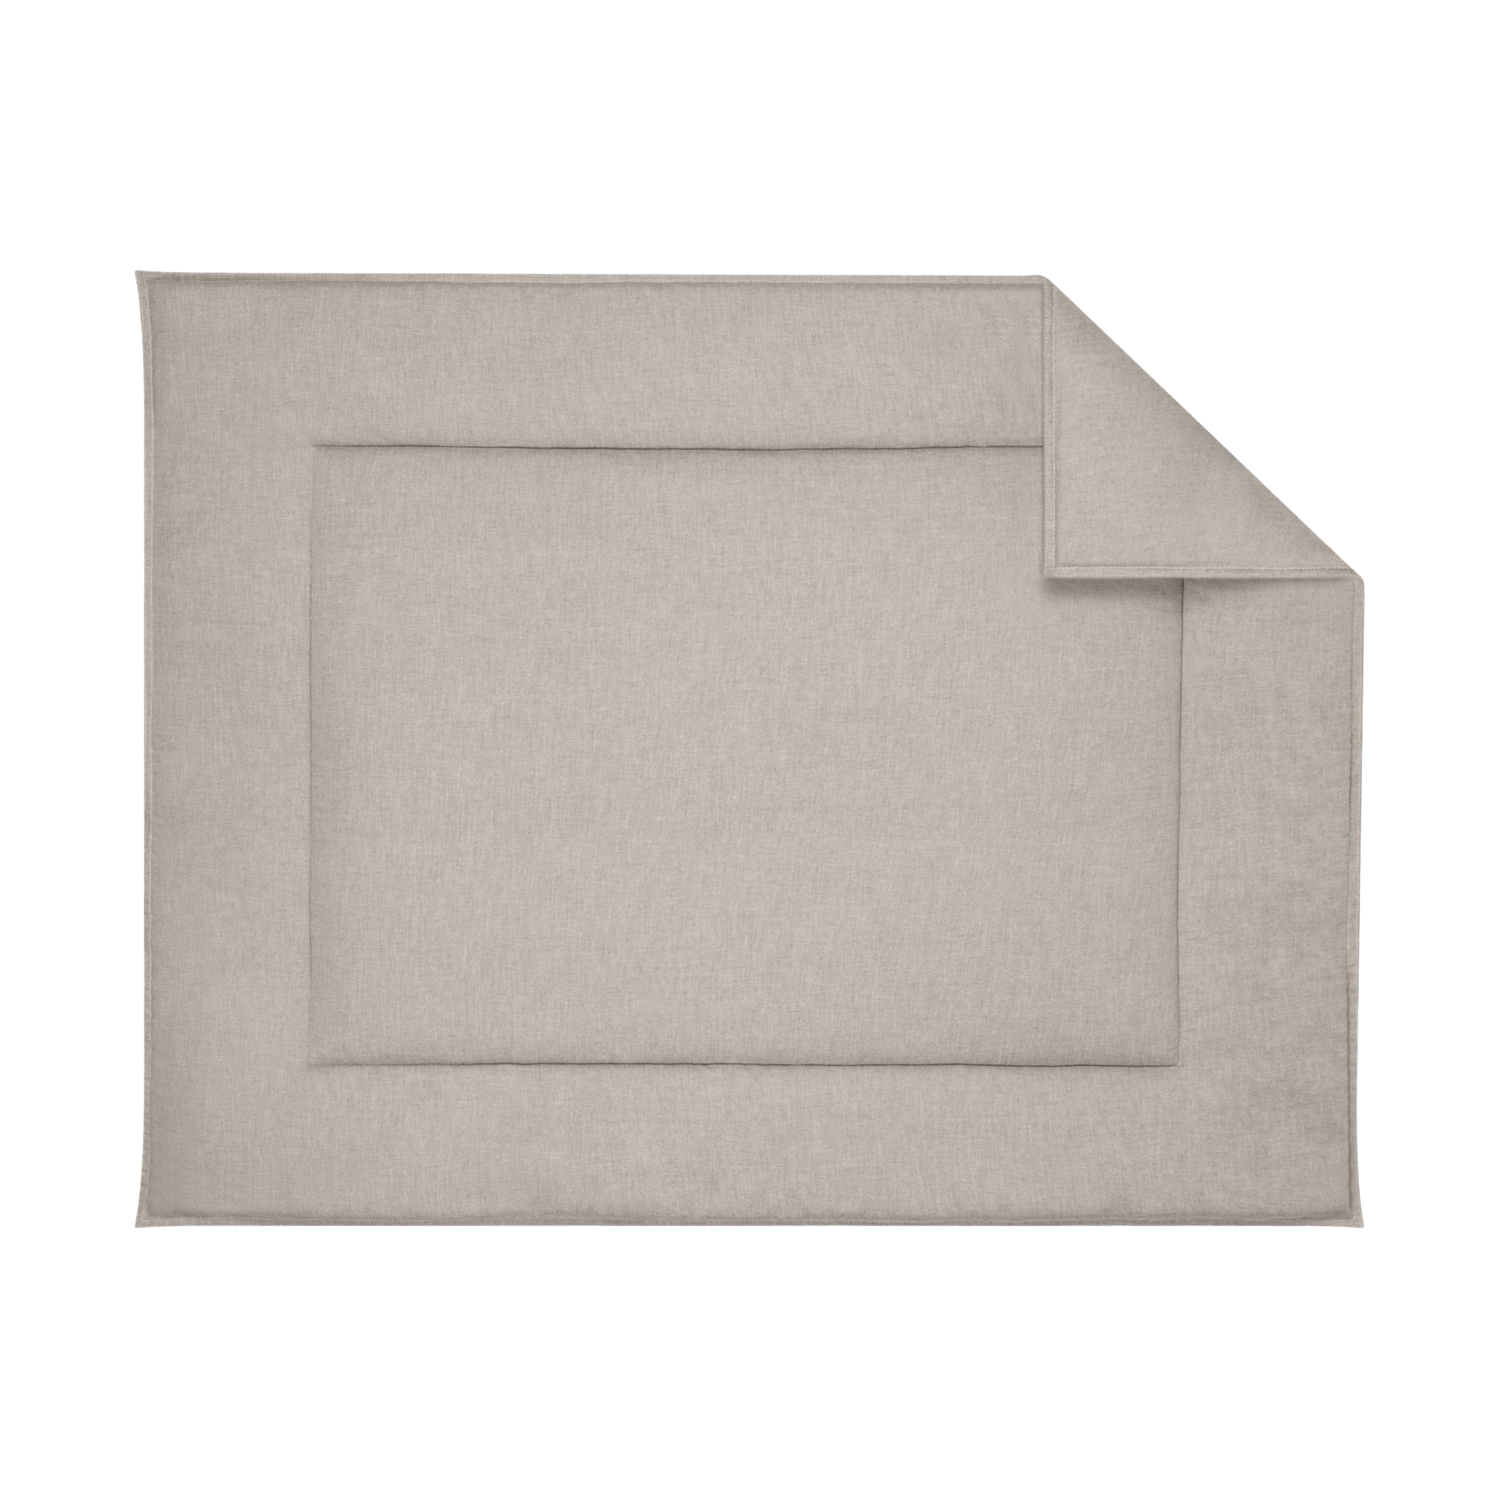 Bink Bedding Bo Boxkleed Zand 80 x 100 cm